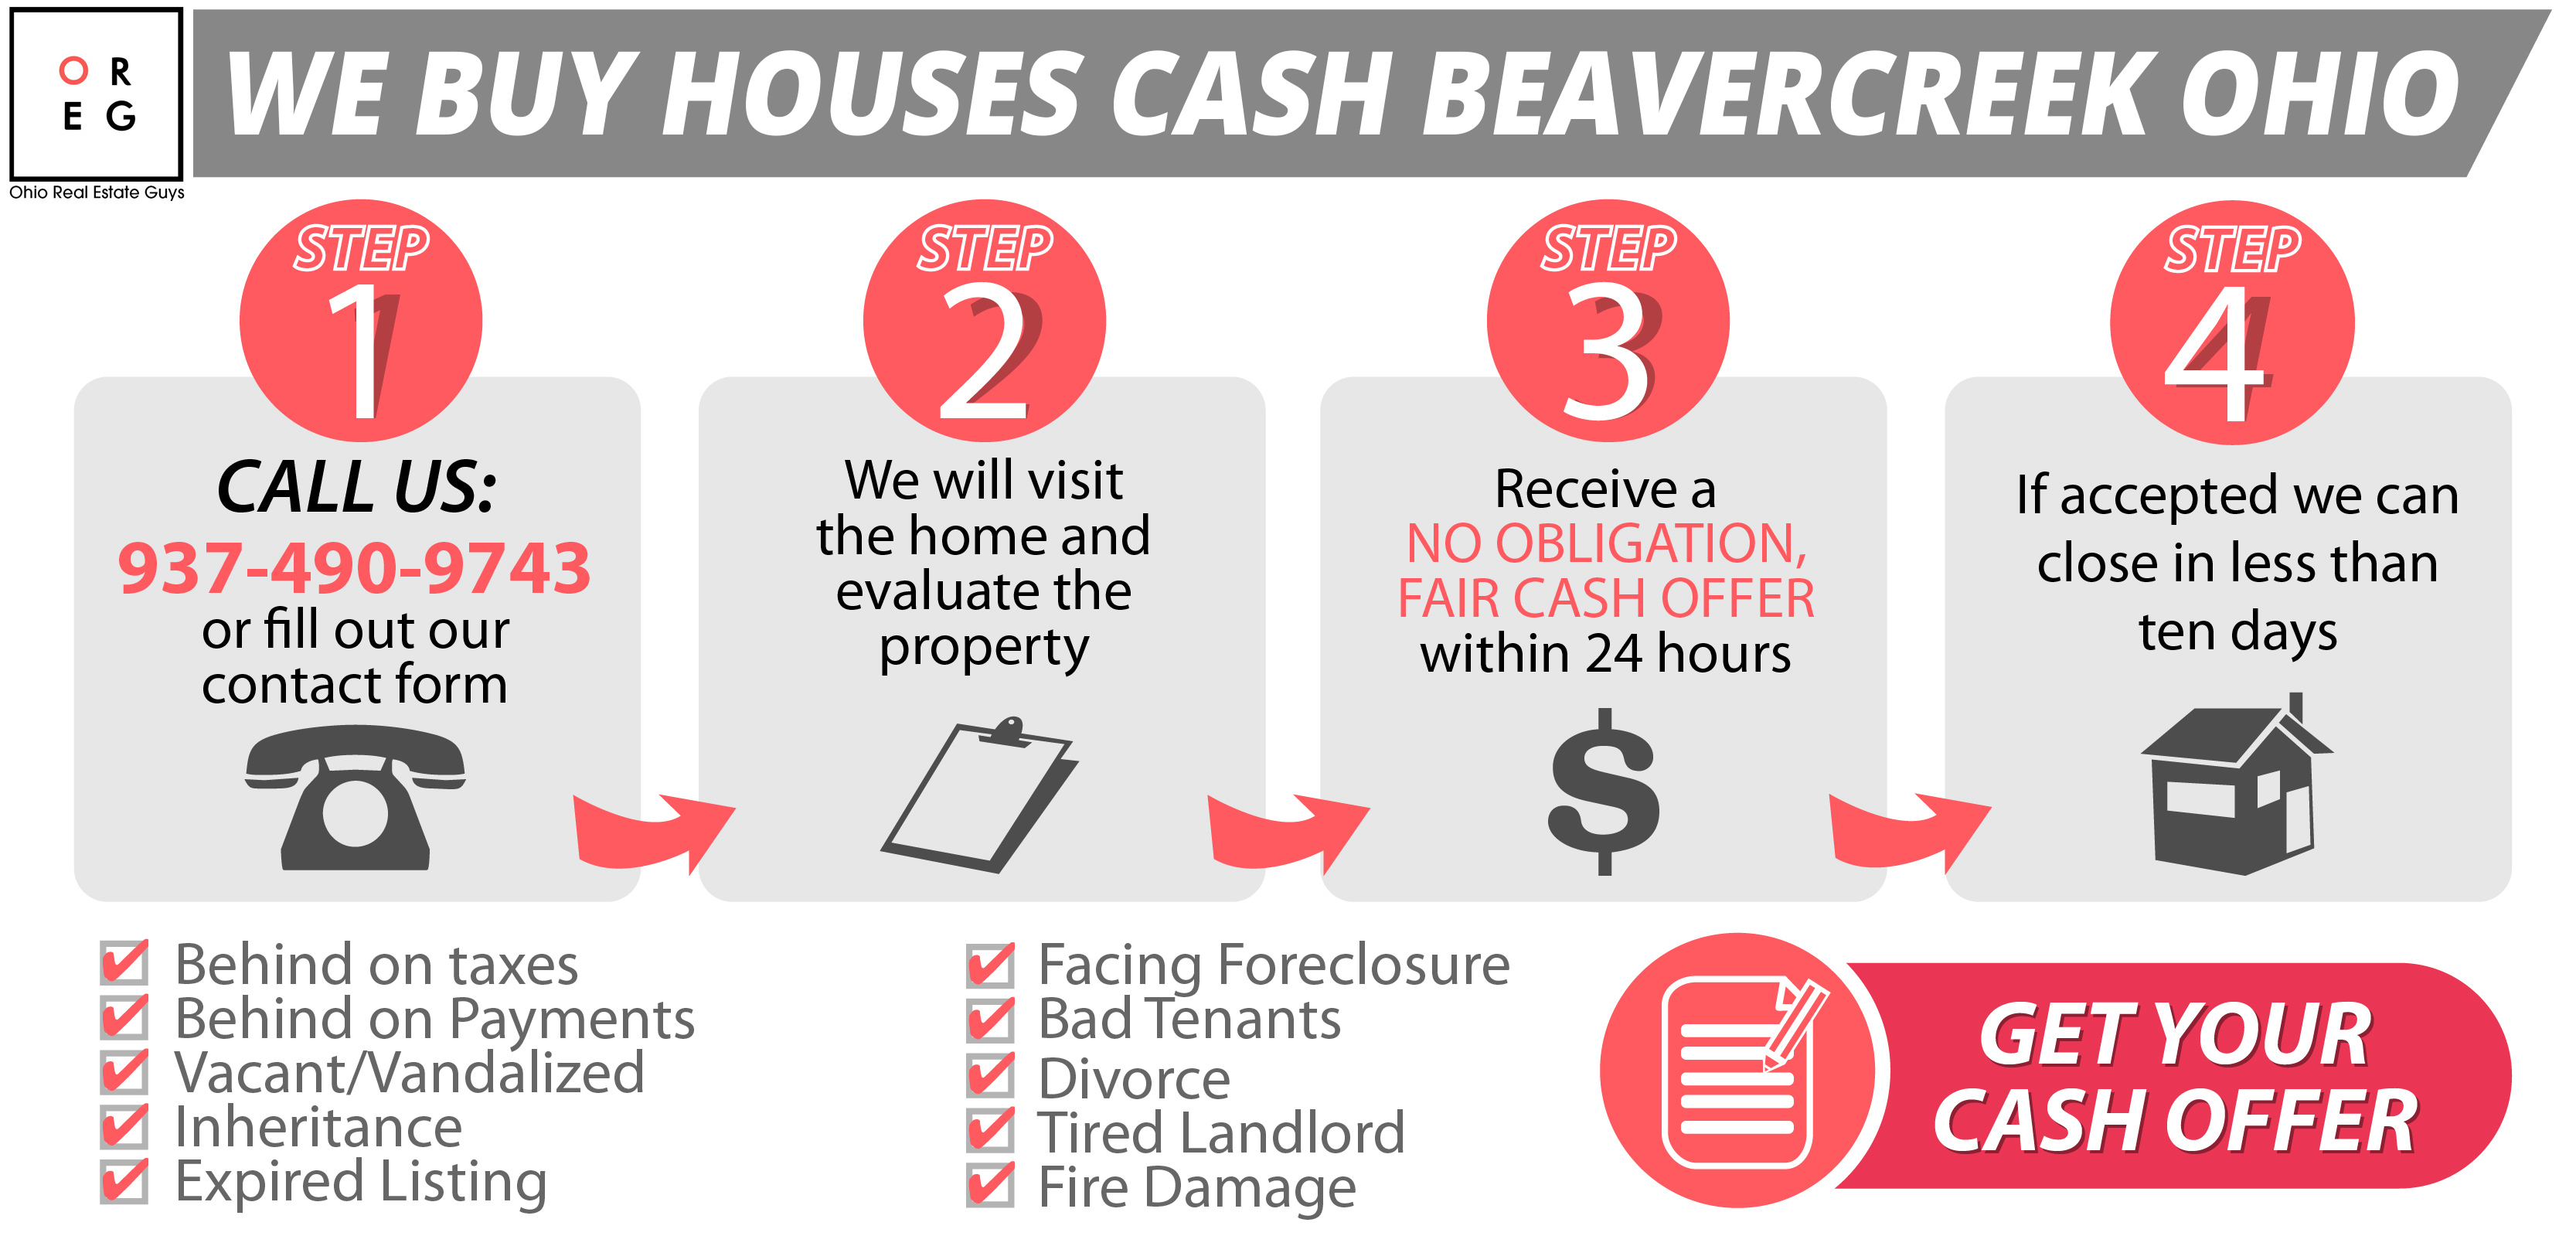 We Buy Houses Cash Beavercreek Ohio